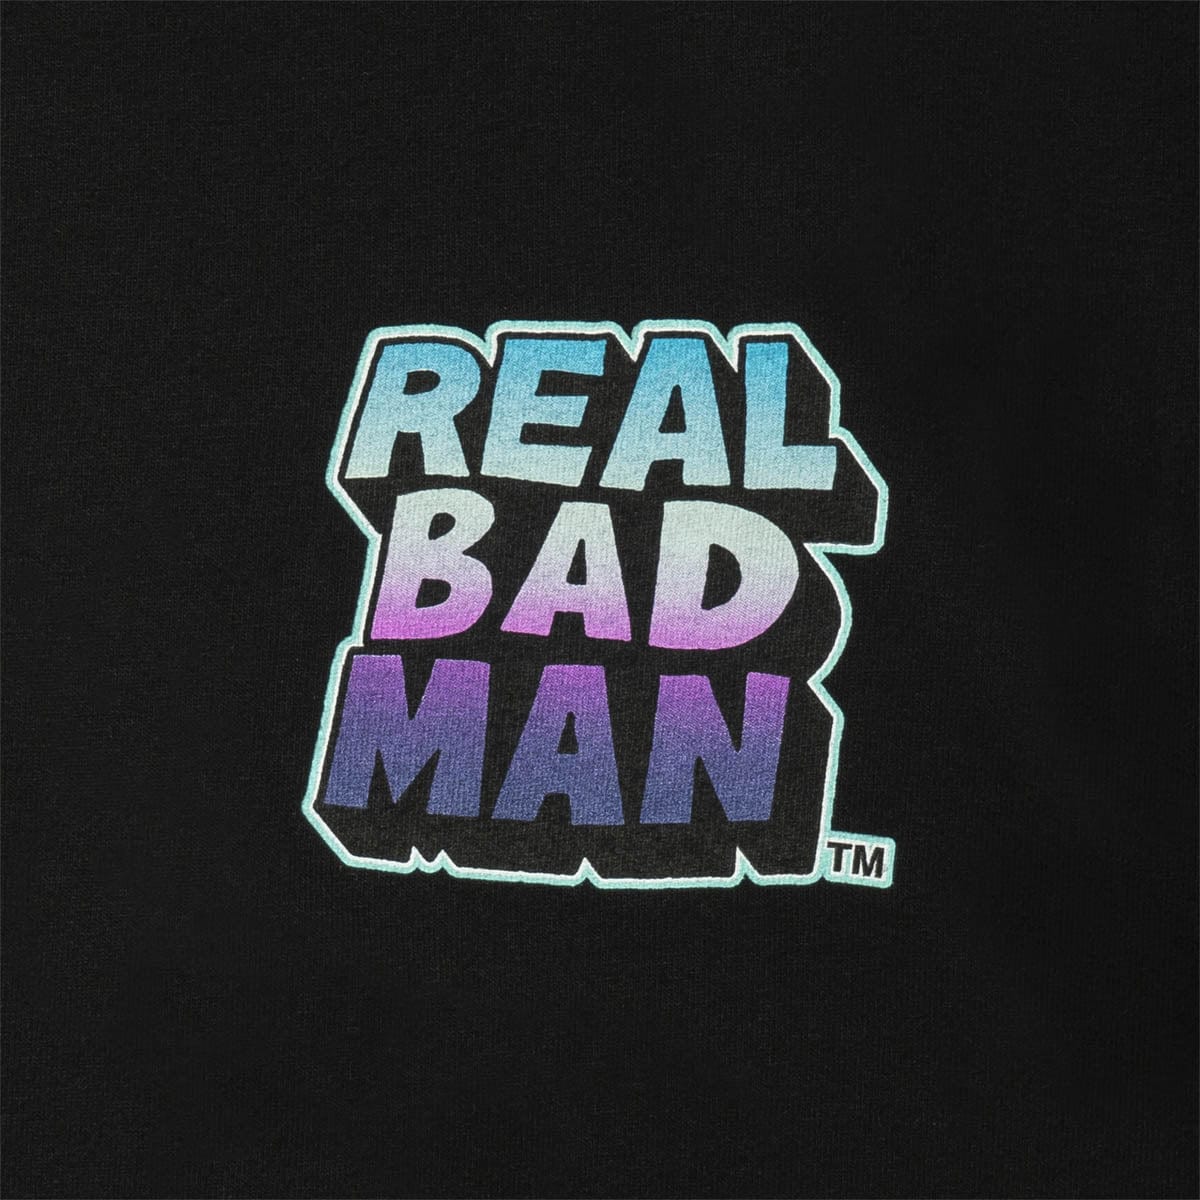 Real Bad Man T-Shirts RBM LOGO TEE VOLUME 7 S/S